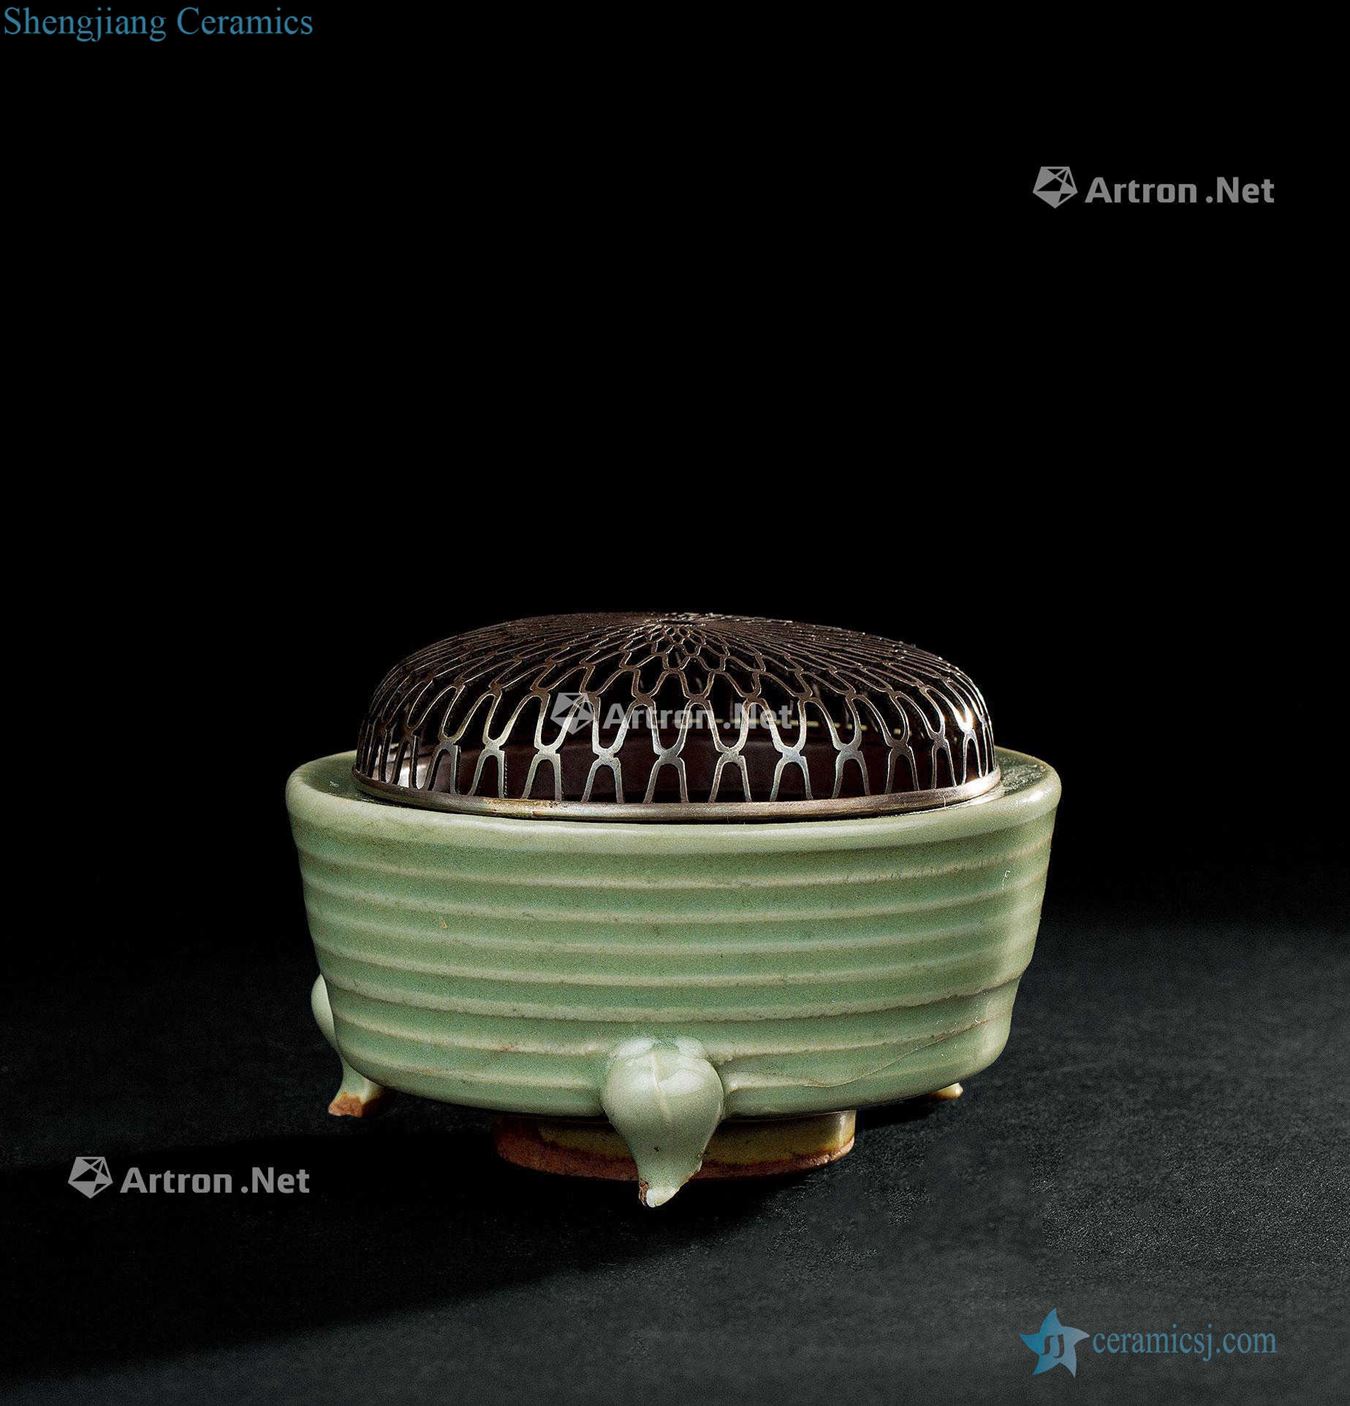 The yuan dynasty (1271-1368), celadon bowstring grain three-legged incense burner